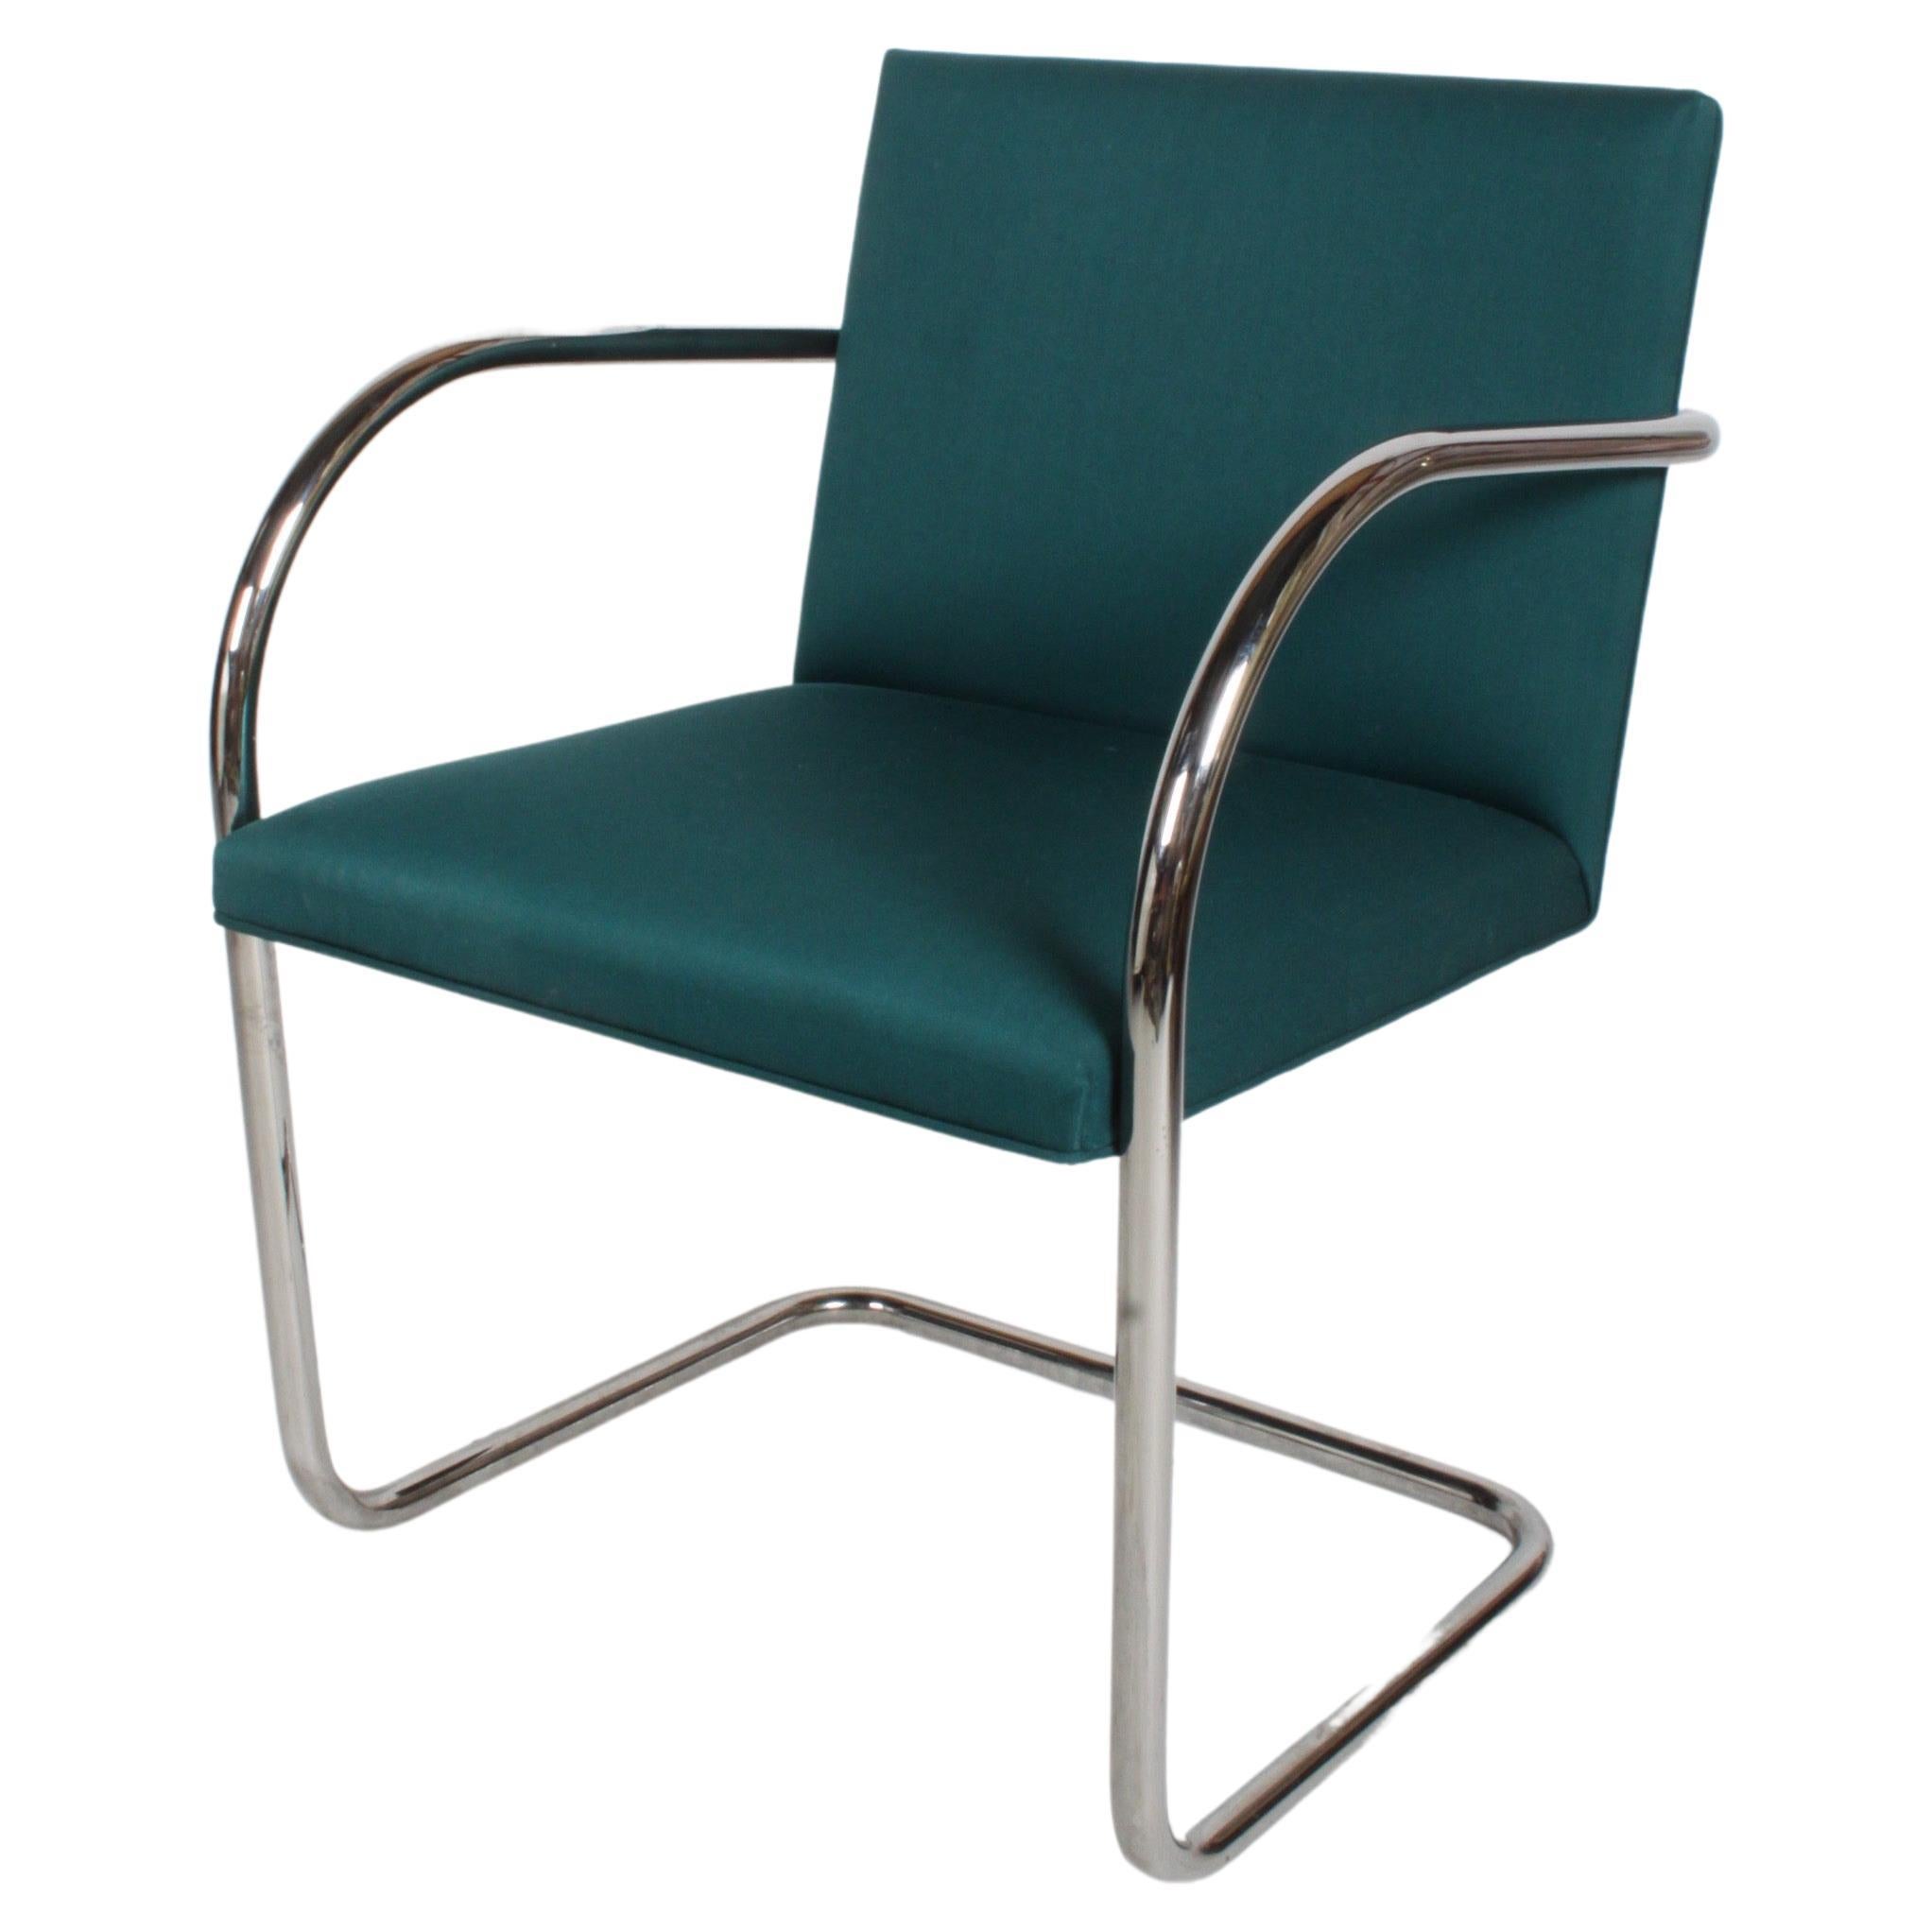 Mid-Century Modern Ludwig Mies van der Rohe for Knoll Tubular Brno Chairs x 2 For Sale